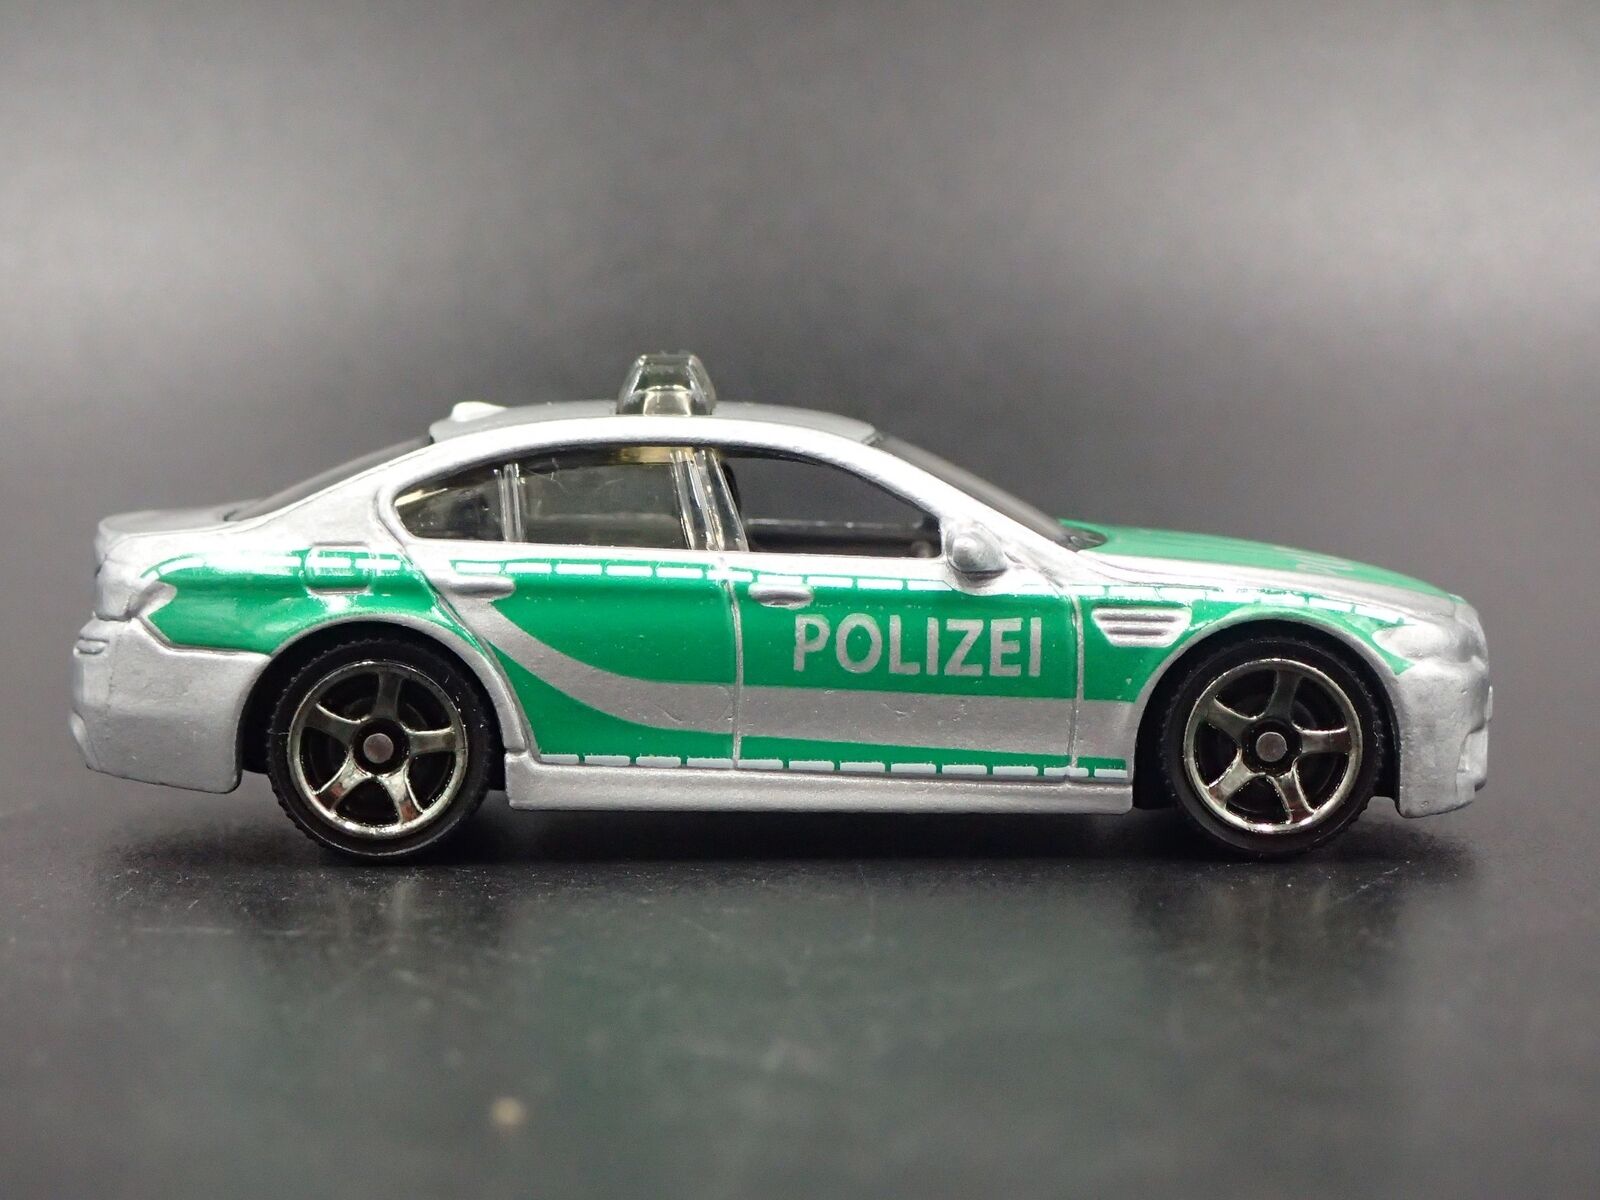 2011-2016 BMW M5 POLICE POLIZEI CAR F10 1:64 SCALE DIORAMA DIECAST MODEL CAR